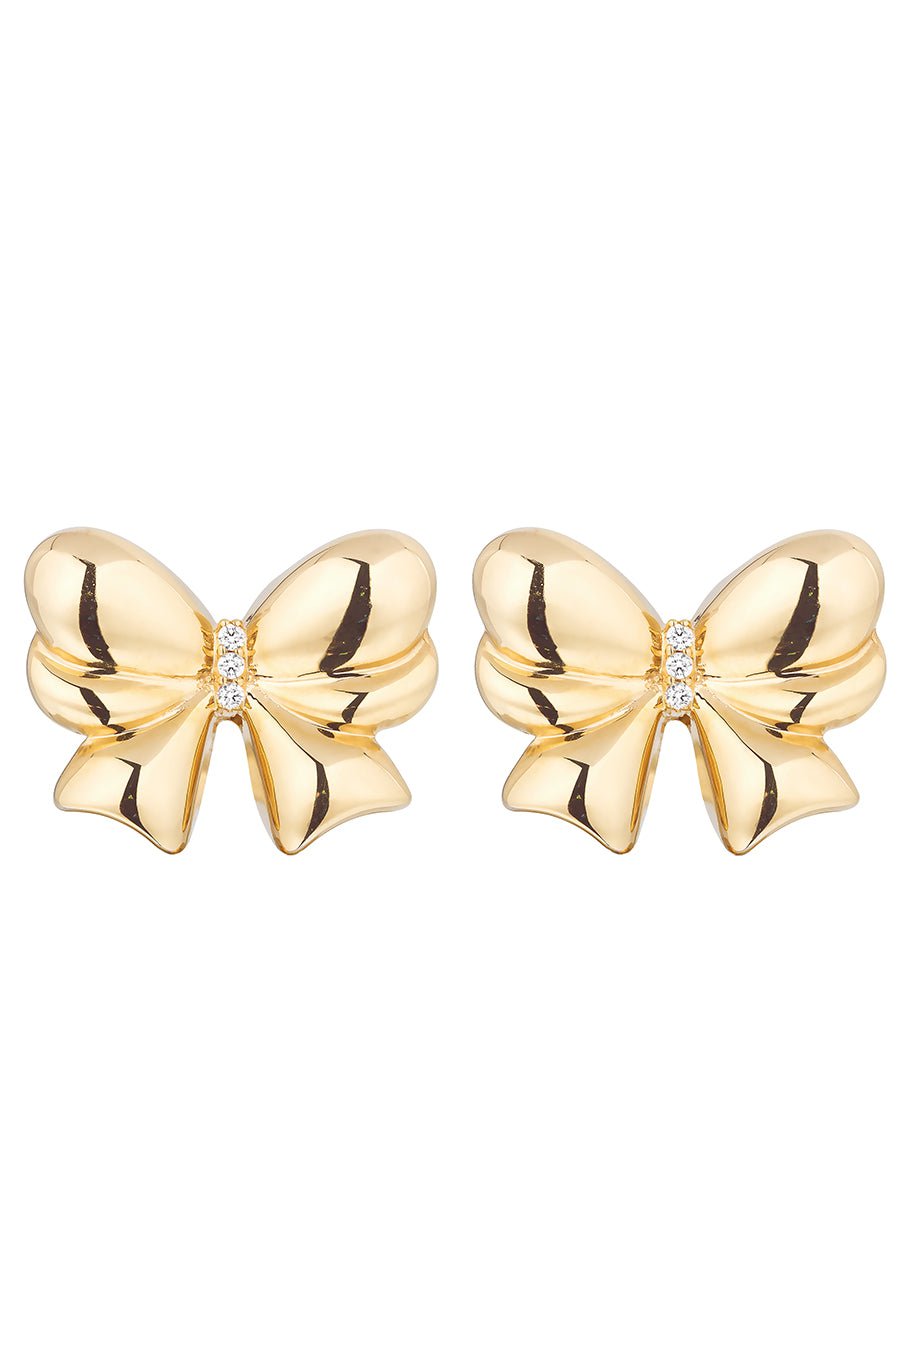 MASON & BOOKS-Evie Bow Stud Earrings-YELLOW GOLD